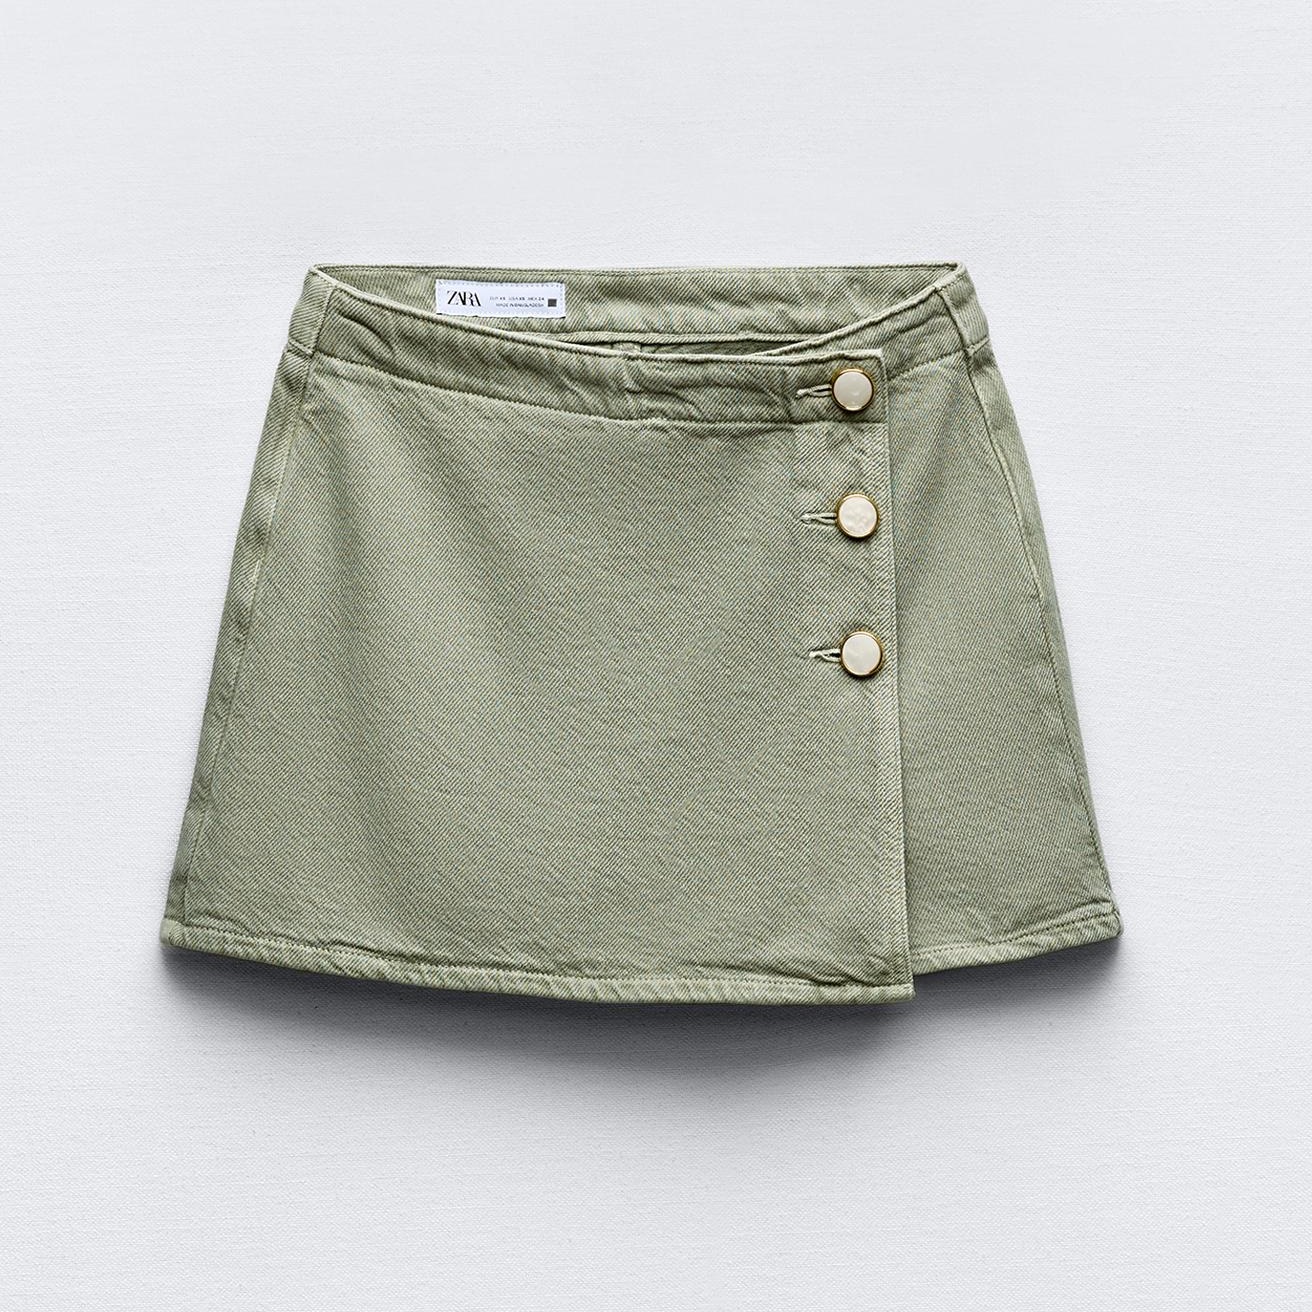 Юбка-шорты Zara Z1975 Denim Wrap With Buttons, хаки